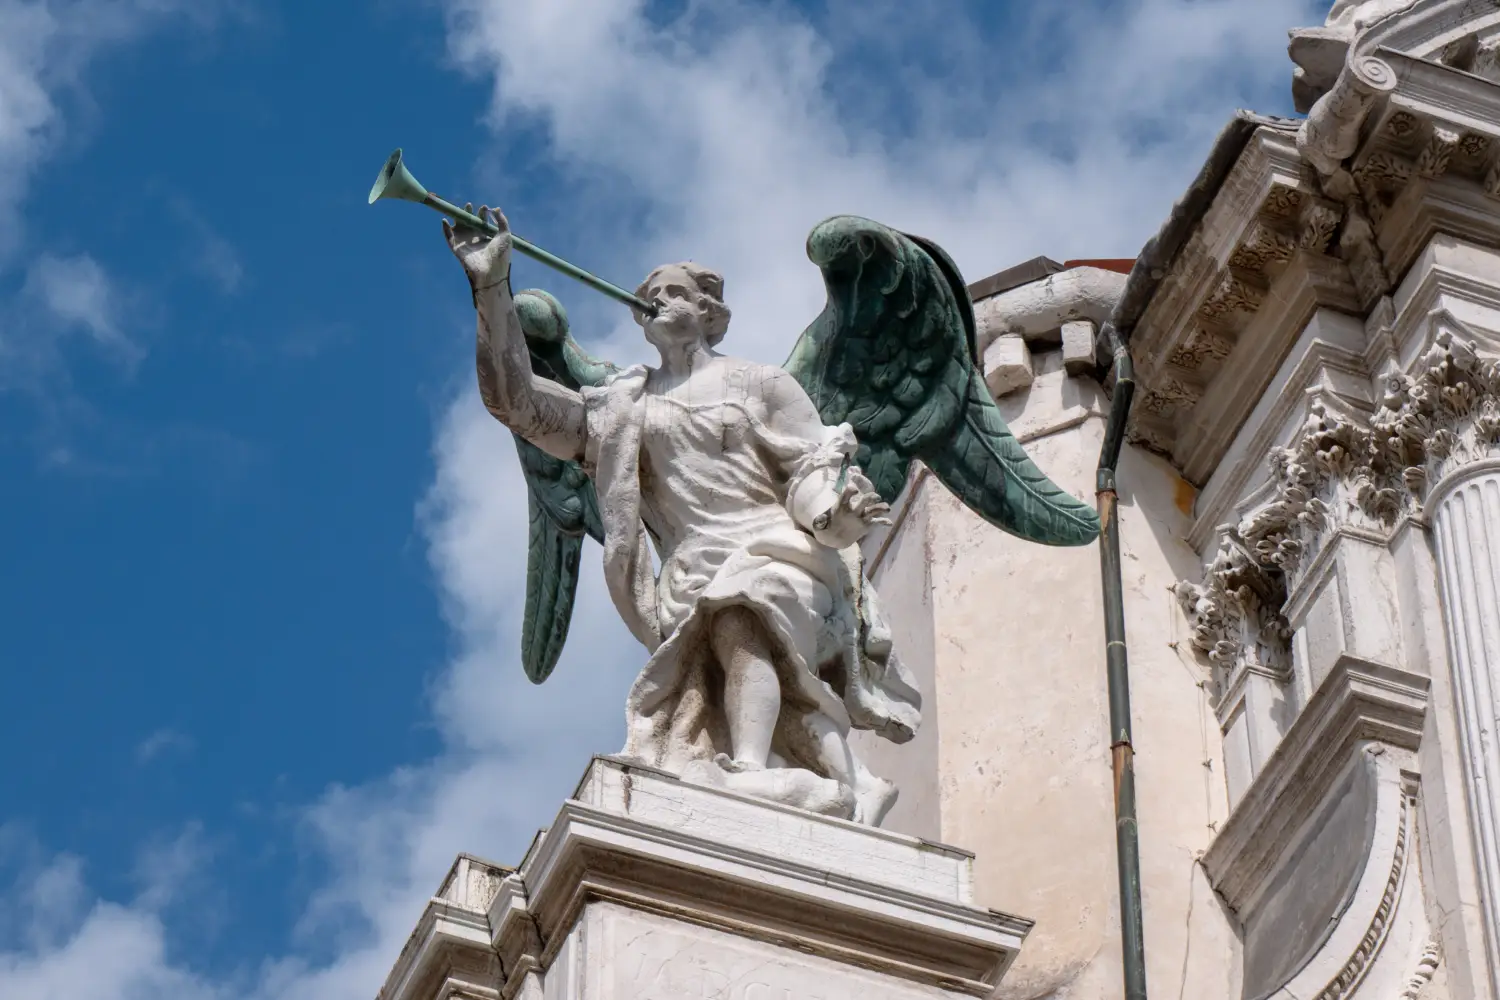 Ferry to Giglio - Details of an Angel with a trumpet at the facade of Santa Maria del Giglio church Santa Maria Zobenigo in Venice, Italy.